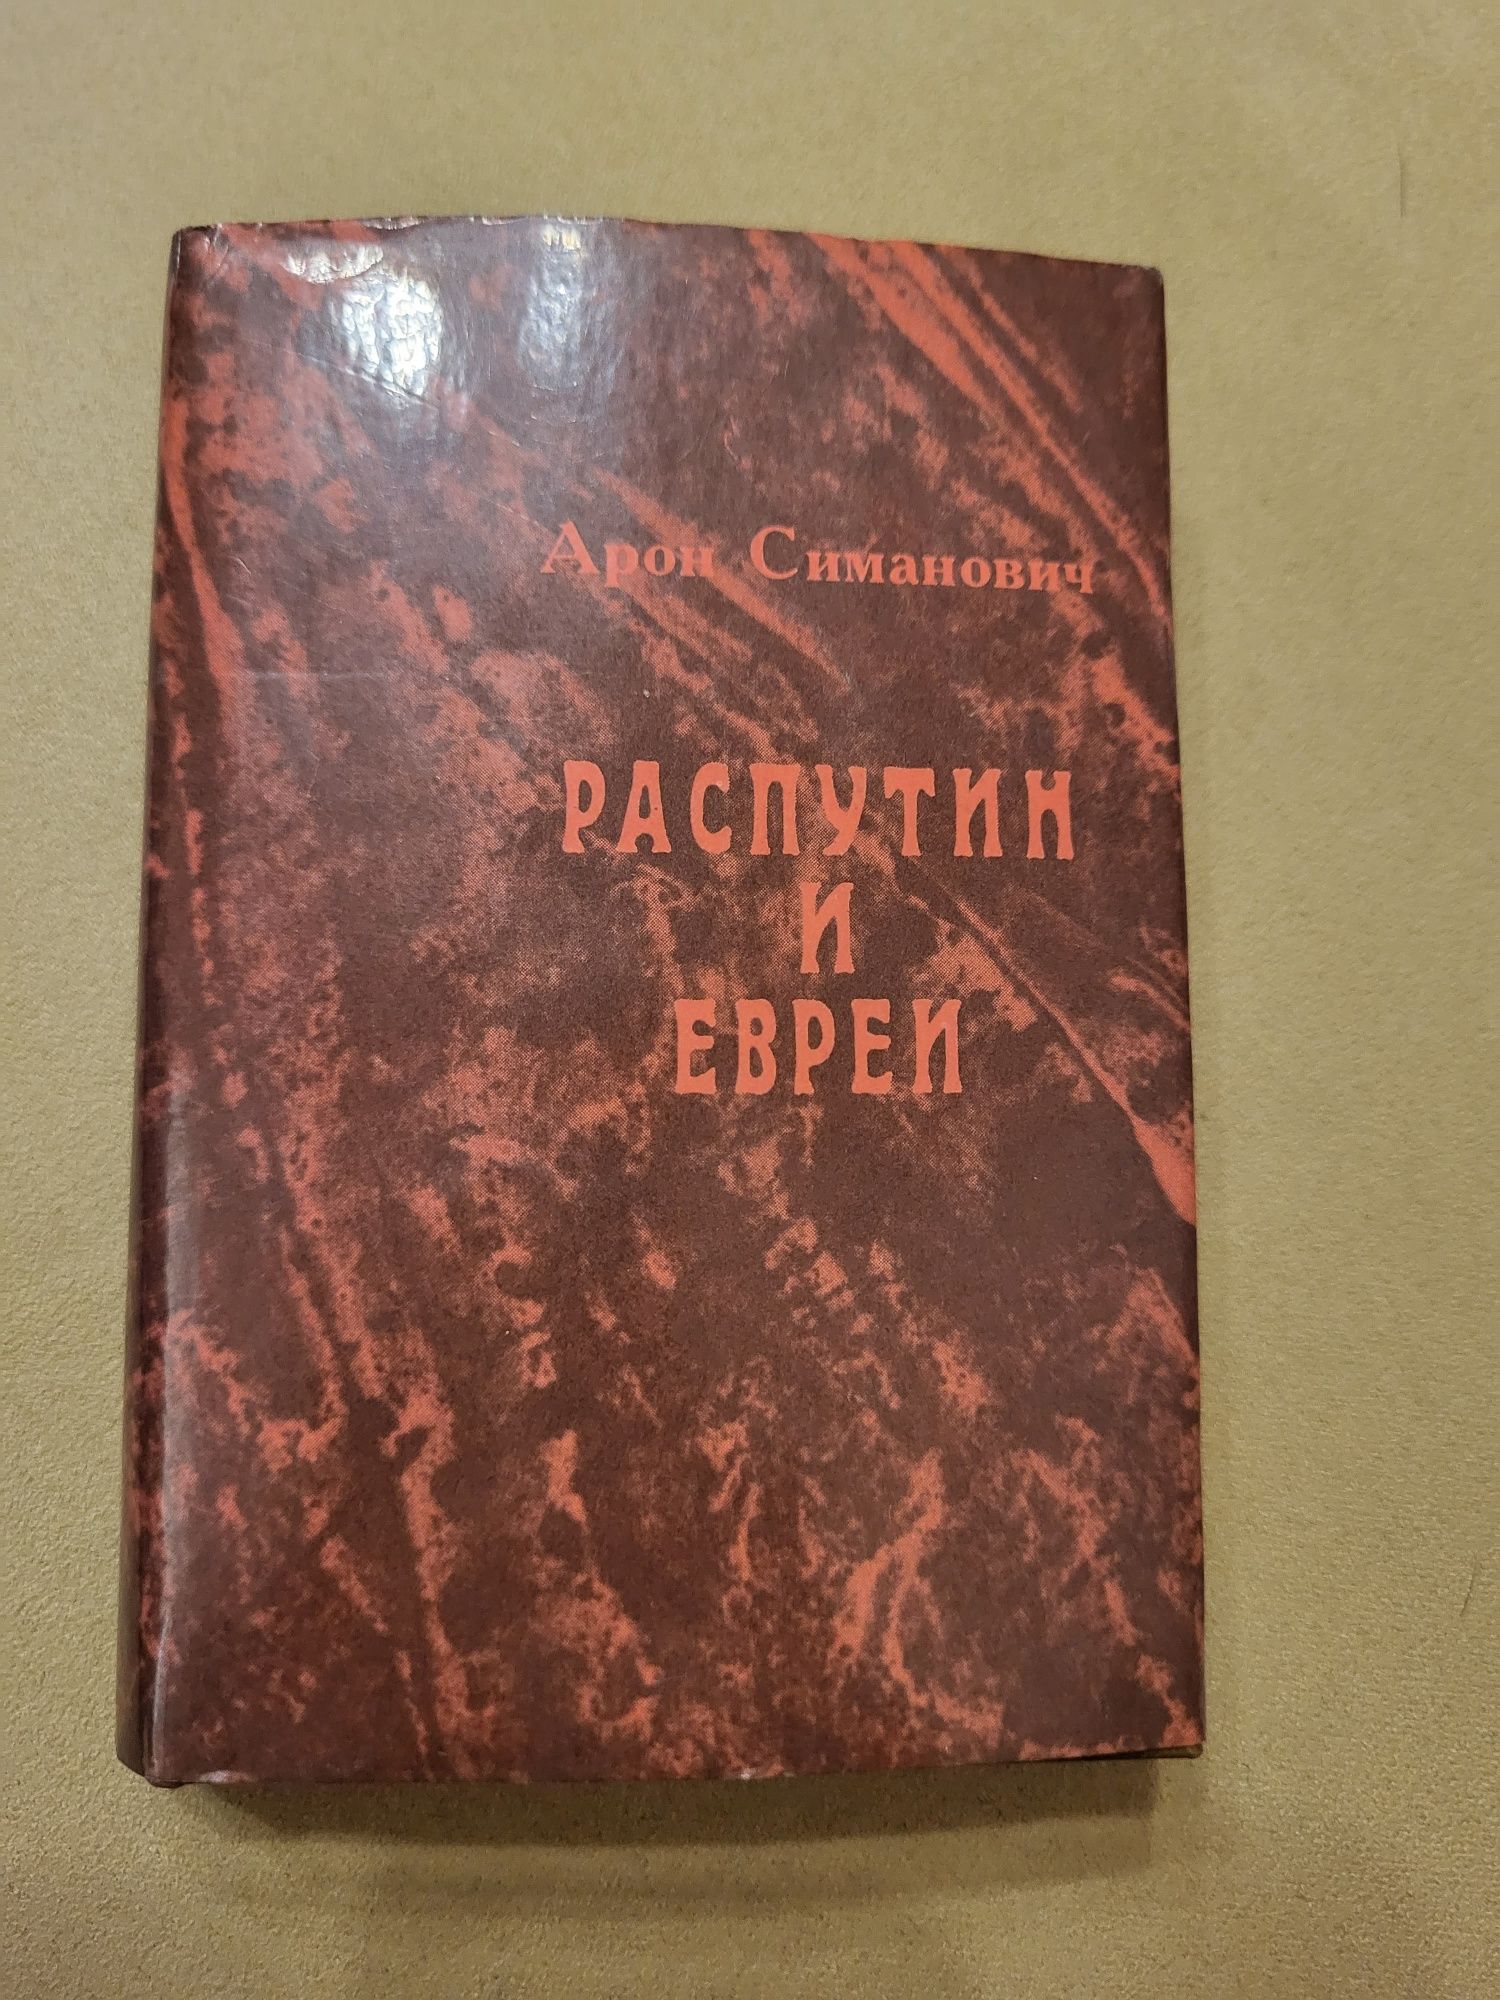 Книга  А. Симанович  "Распутин и евреи "